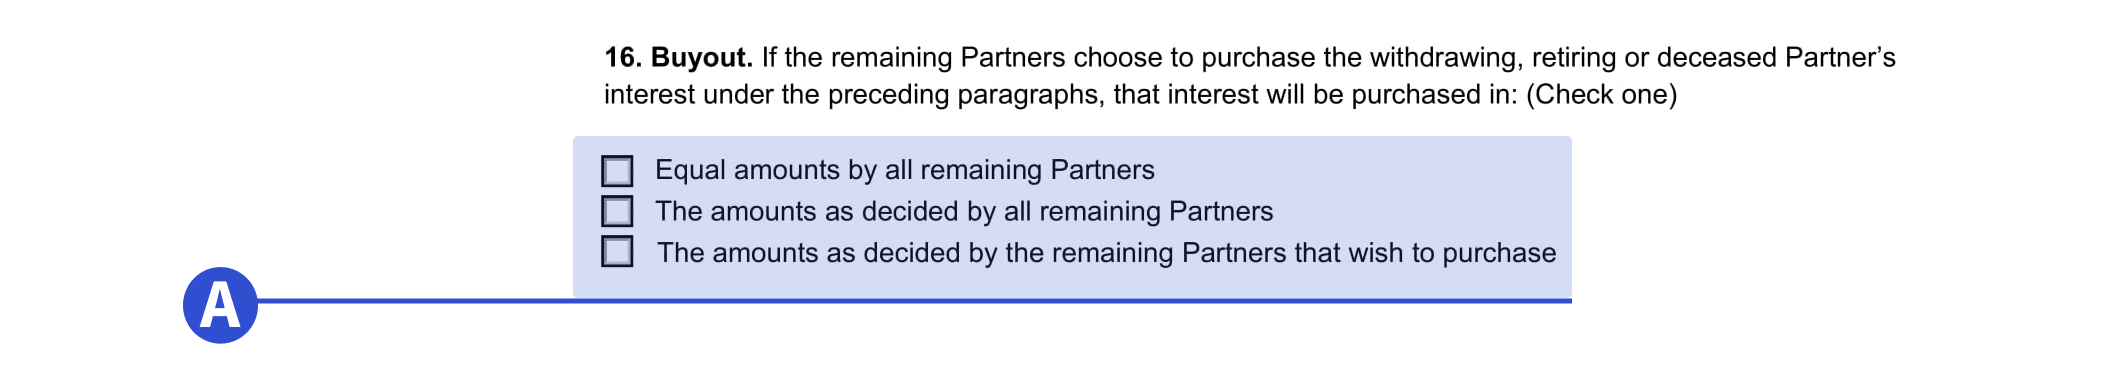 partnership agreement buyout information